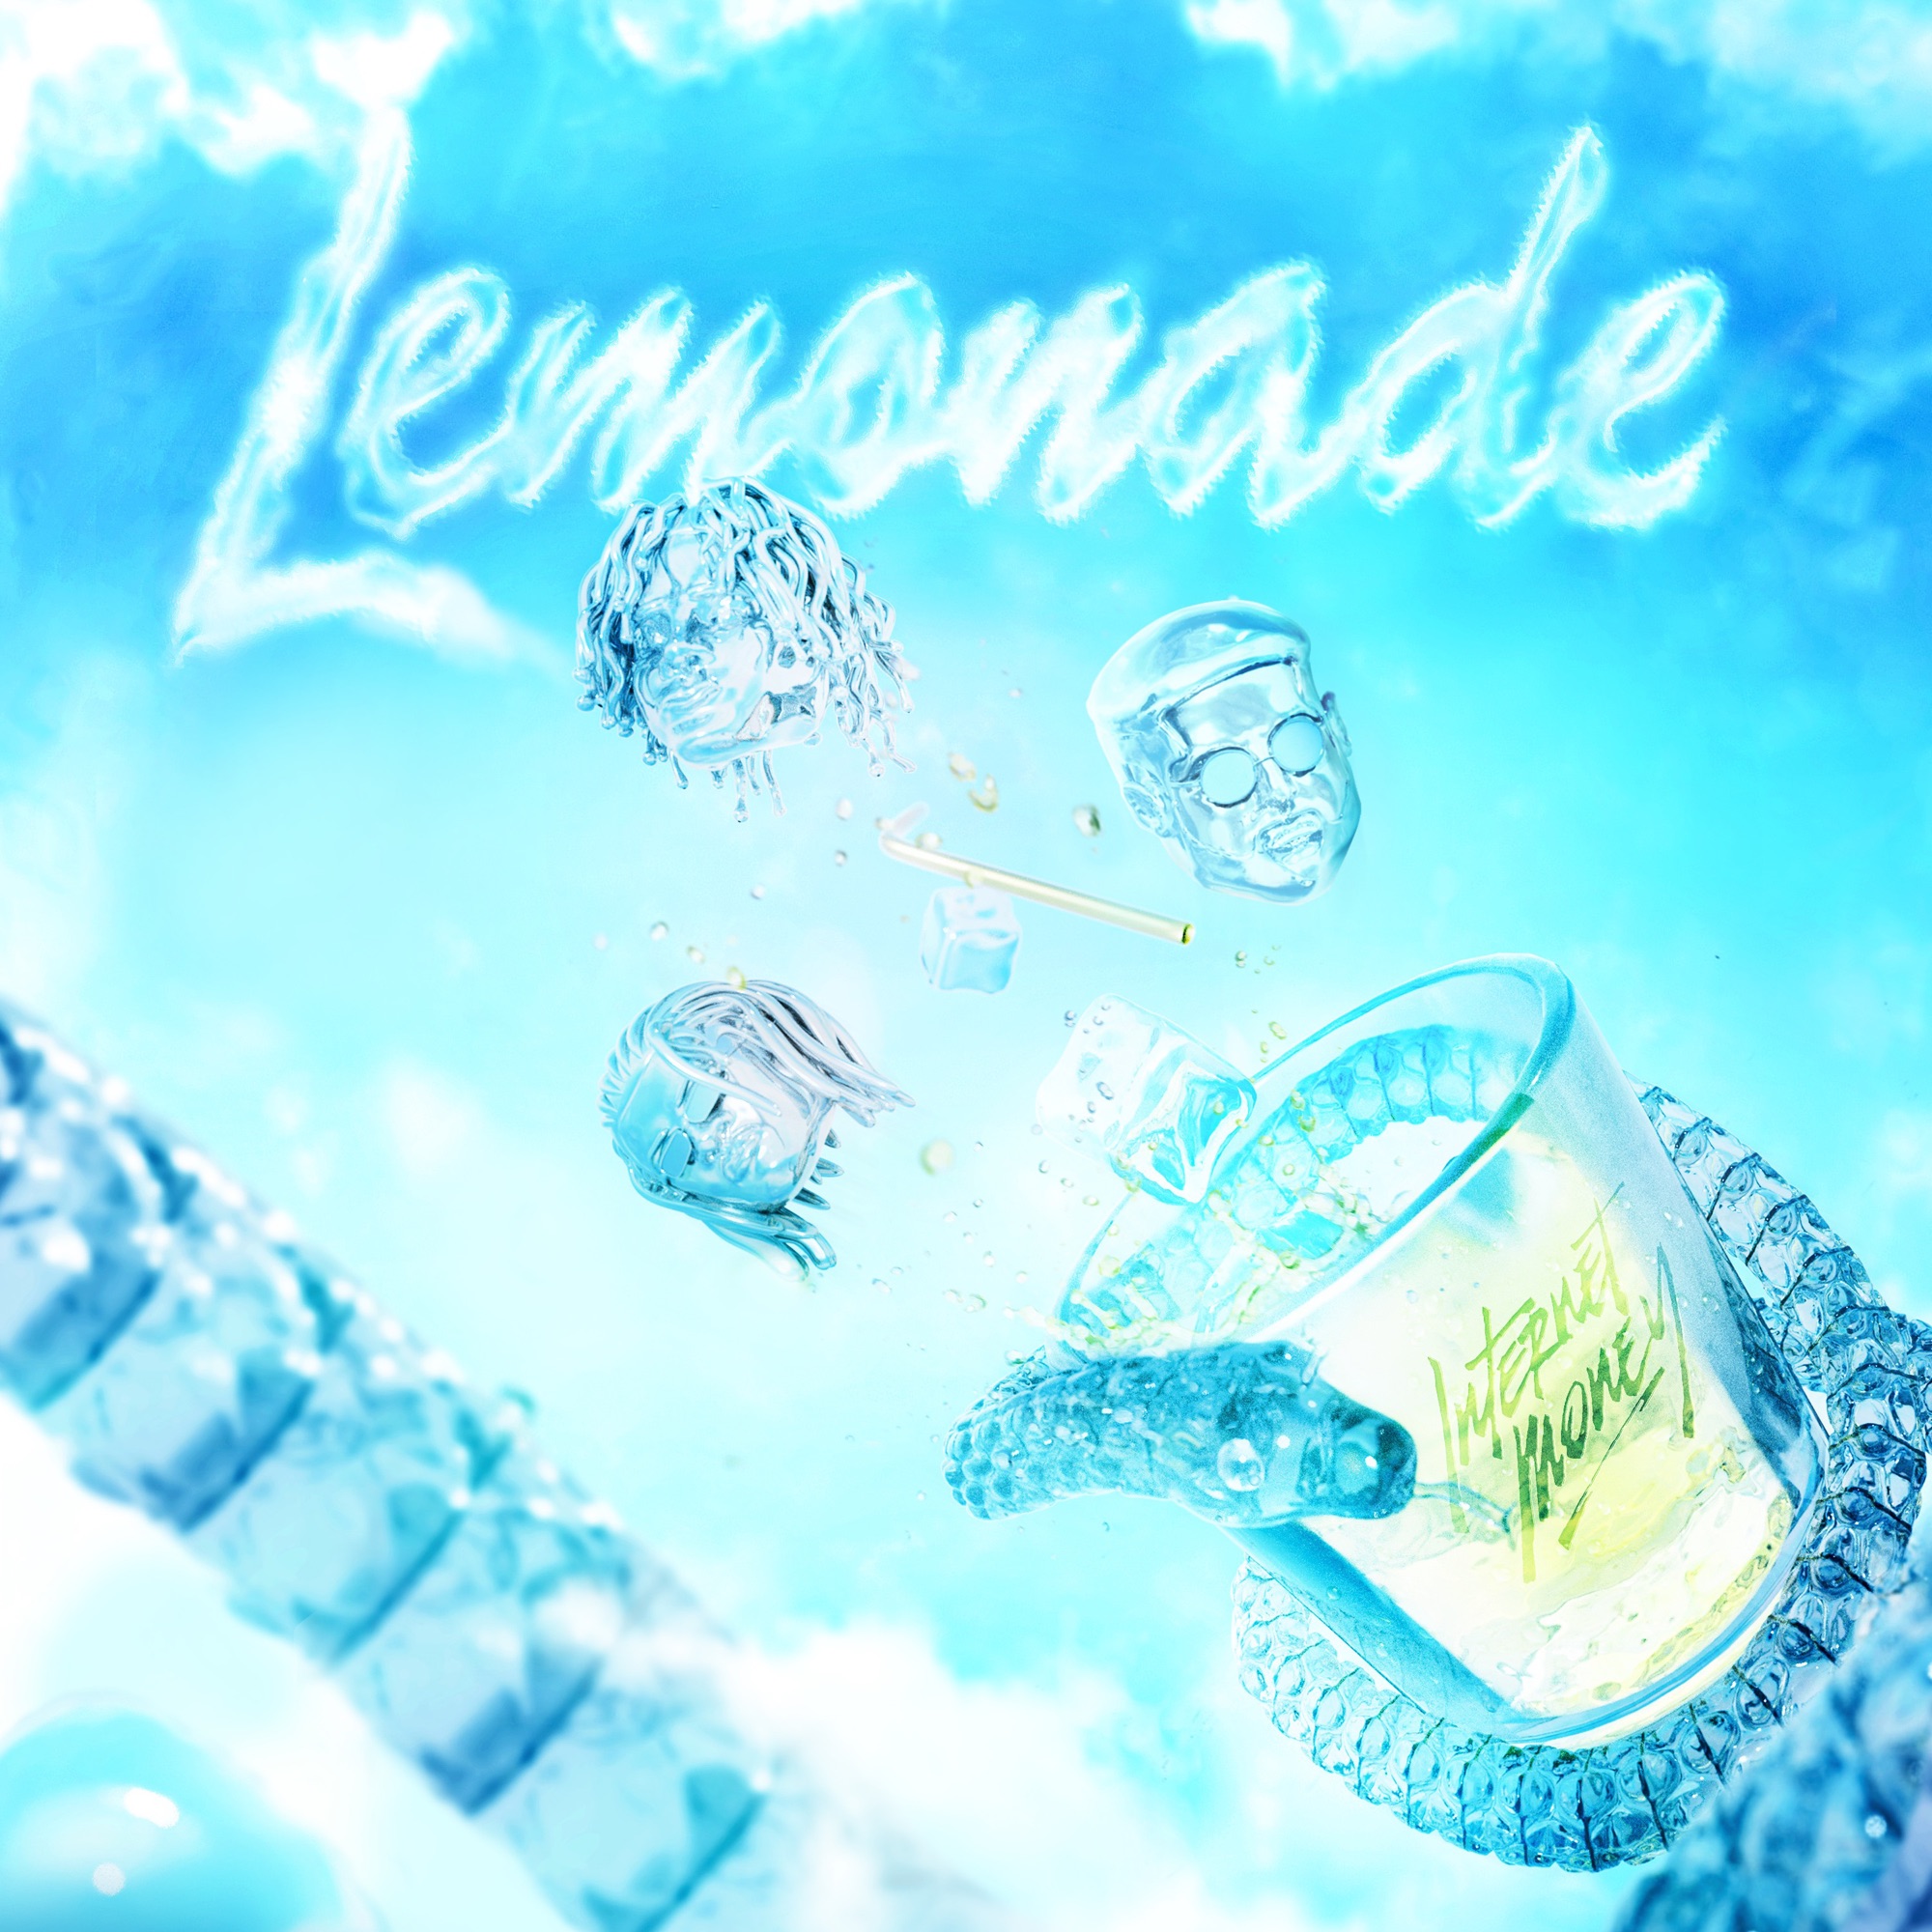 Art for Lemonade (feat. Don Toliver & NAV) by Internet Money & Gunna